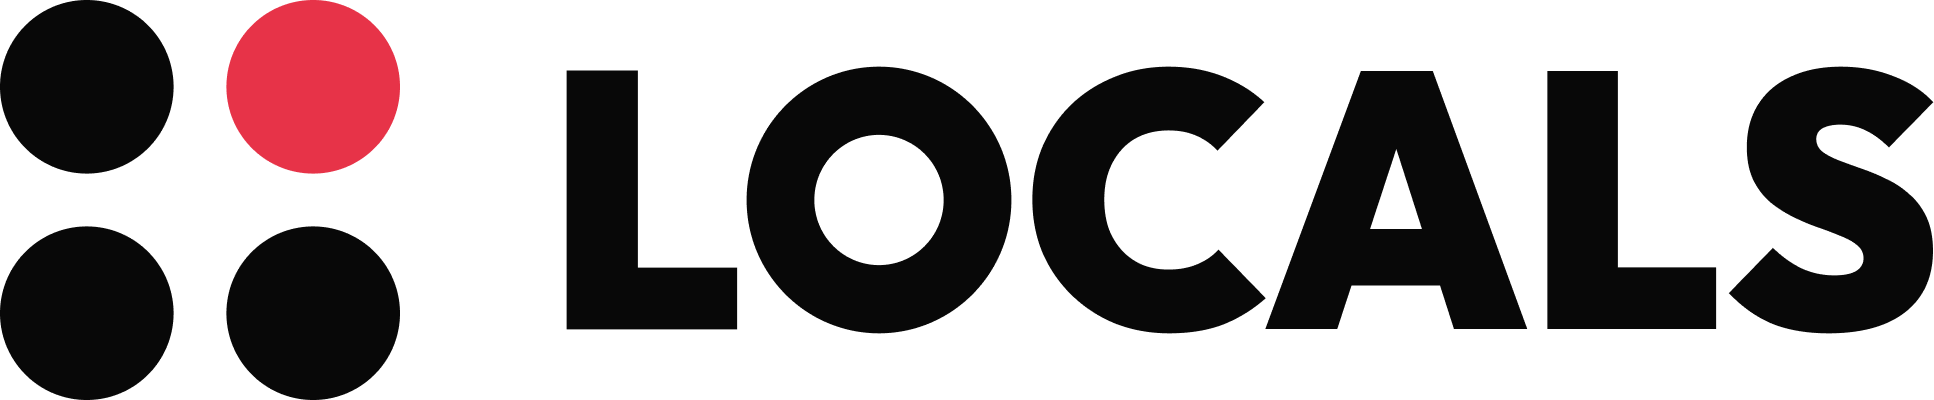 test9 logo